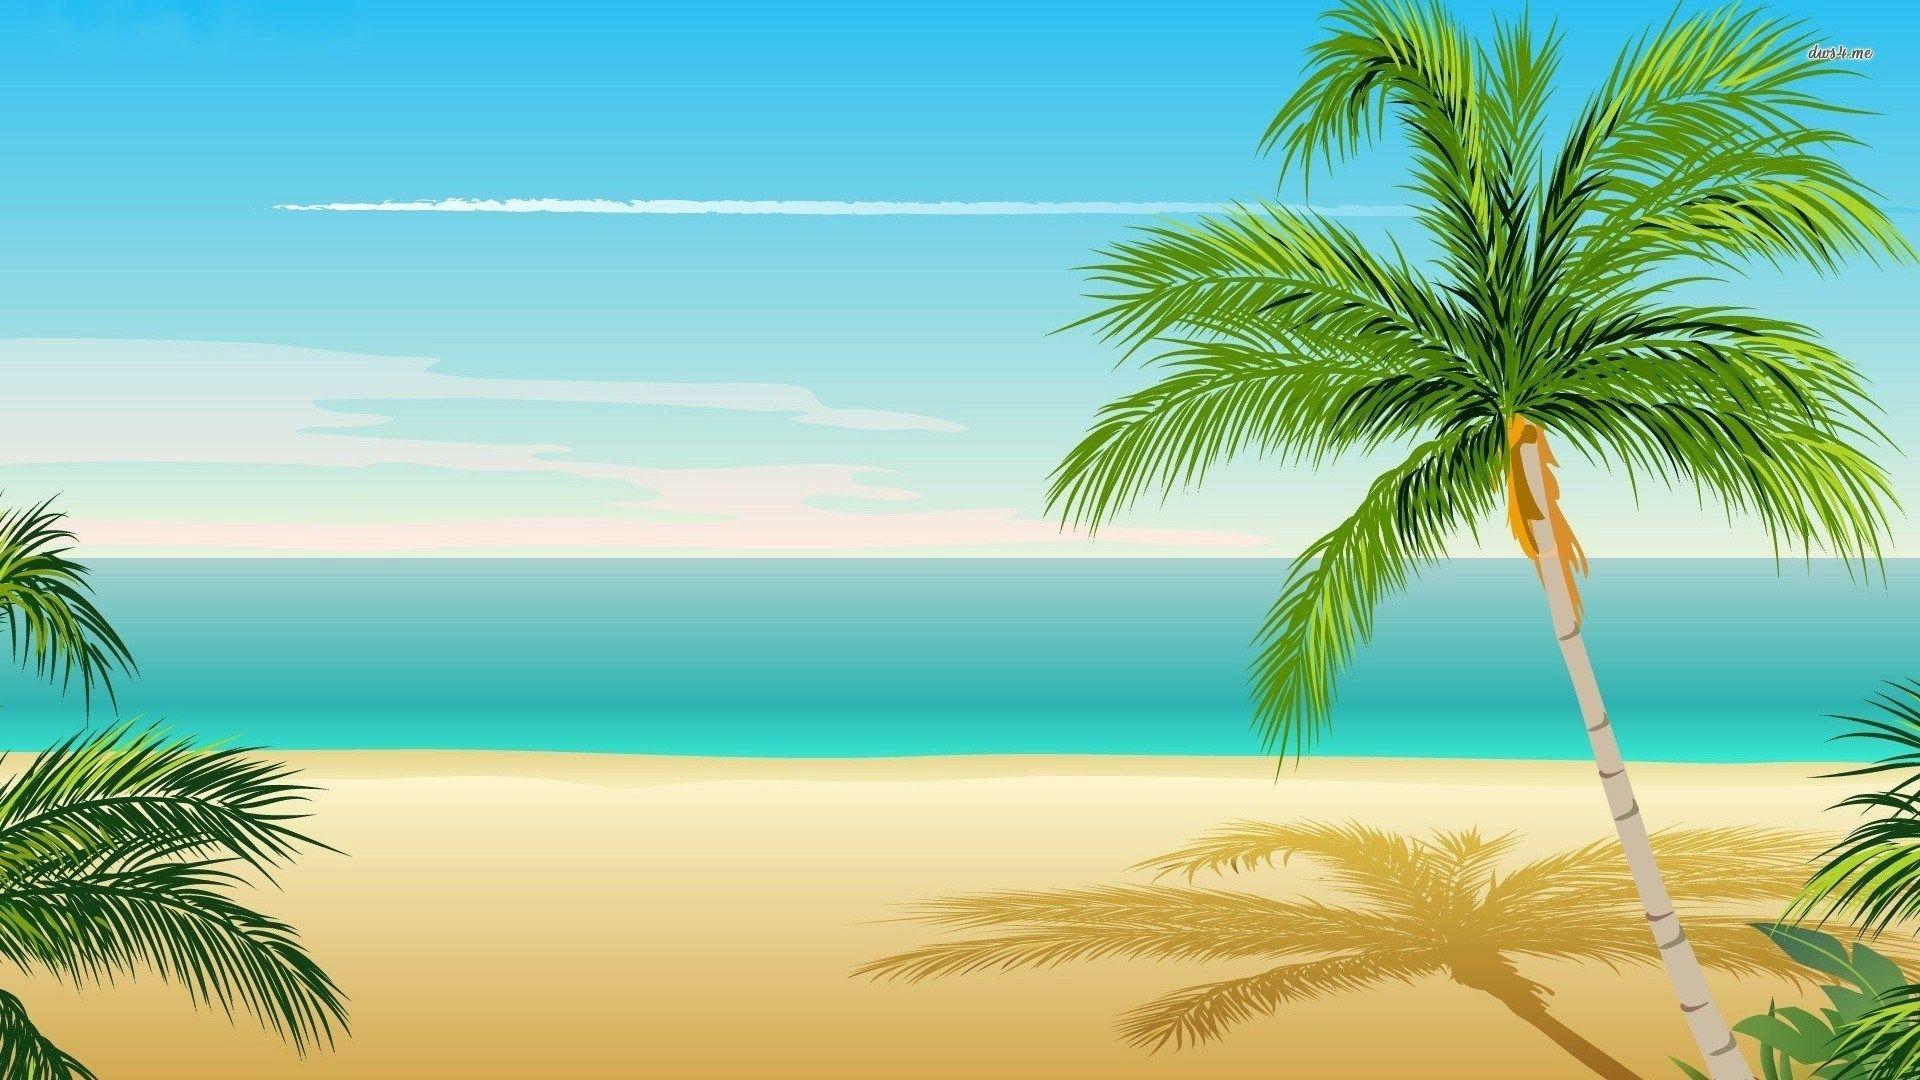 Lovely Palm Tree Beach Scene Wallpaper. The Most Beautiful Beach